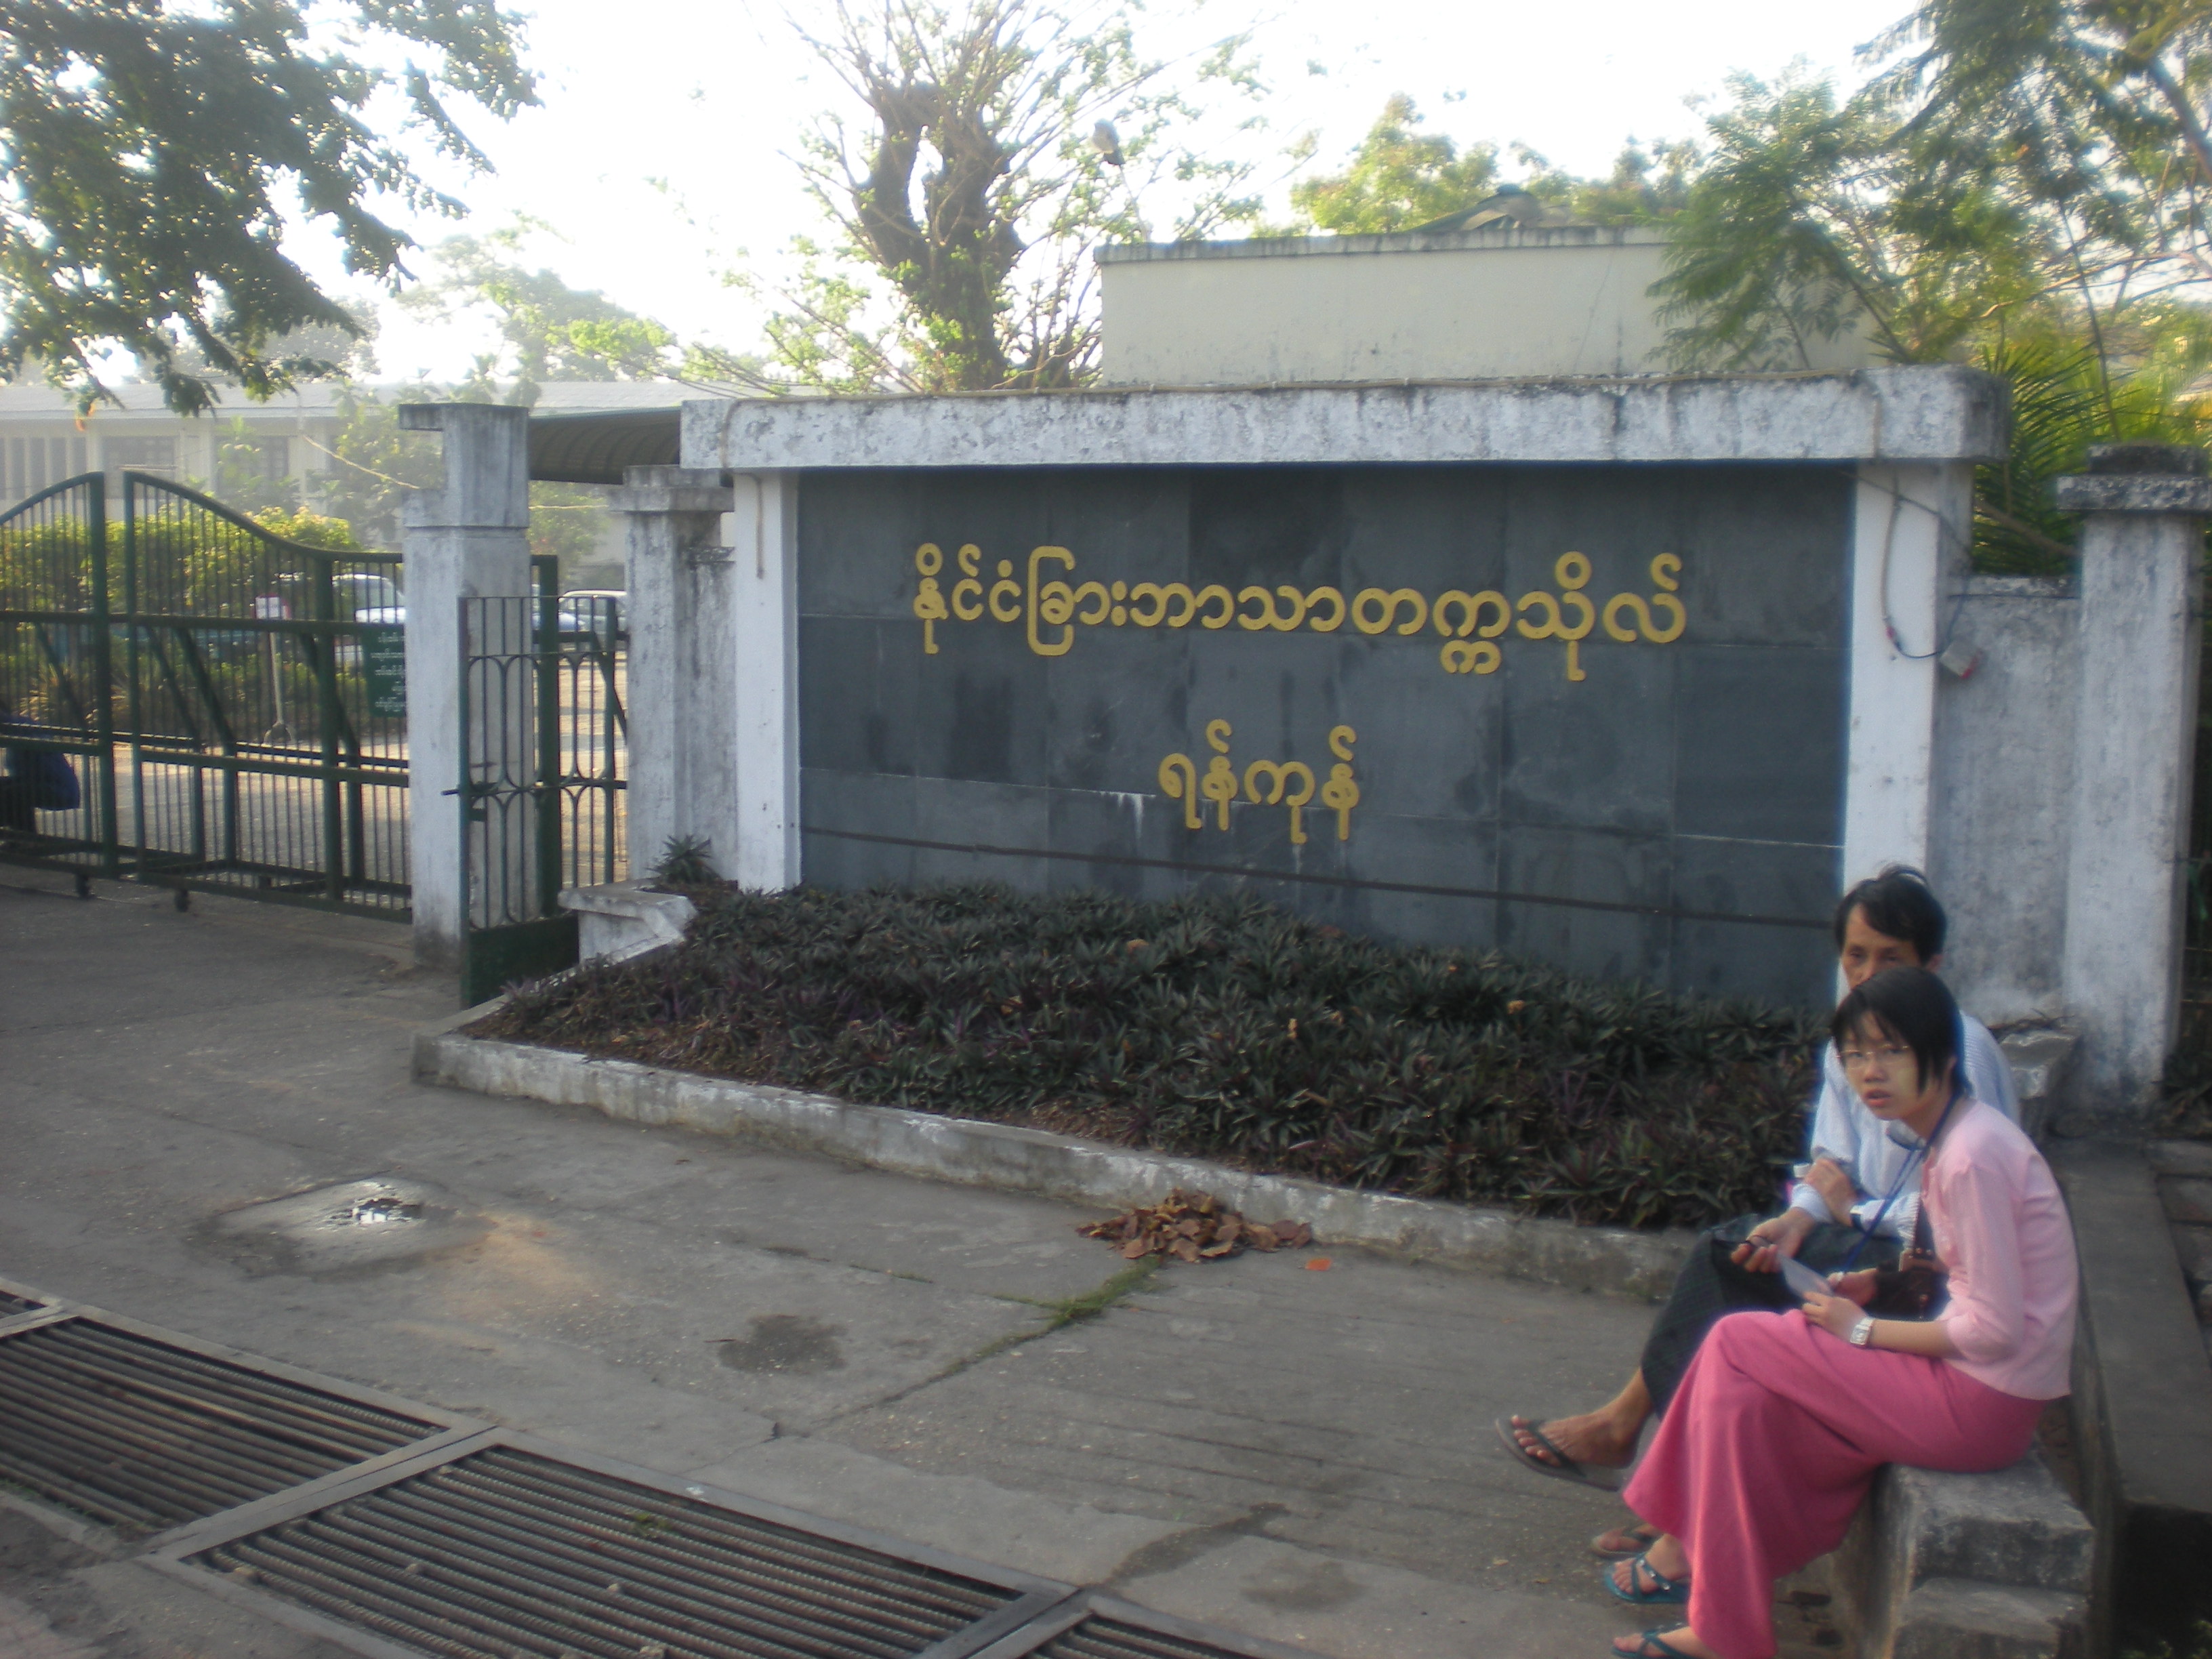 wikipedia myanmar language